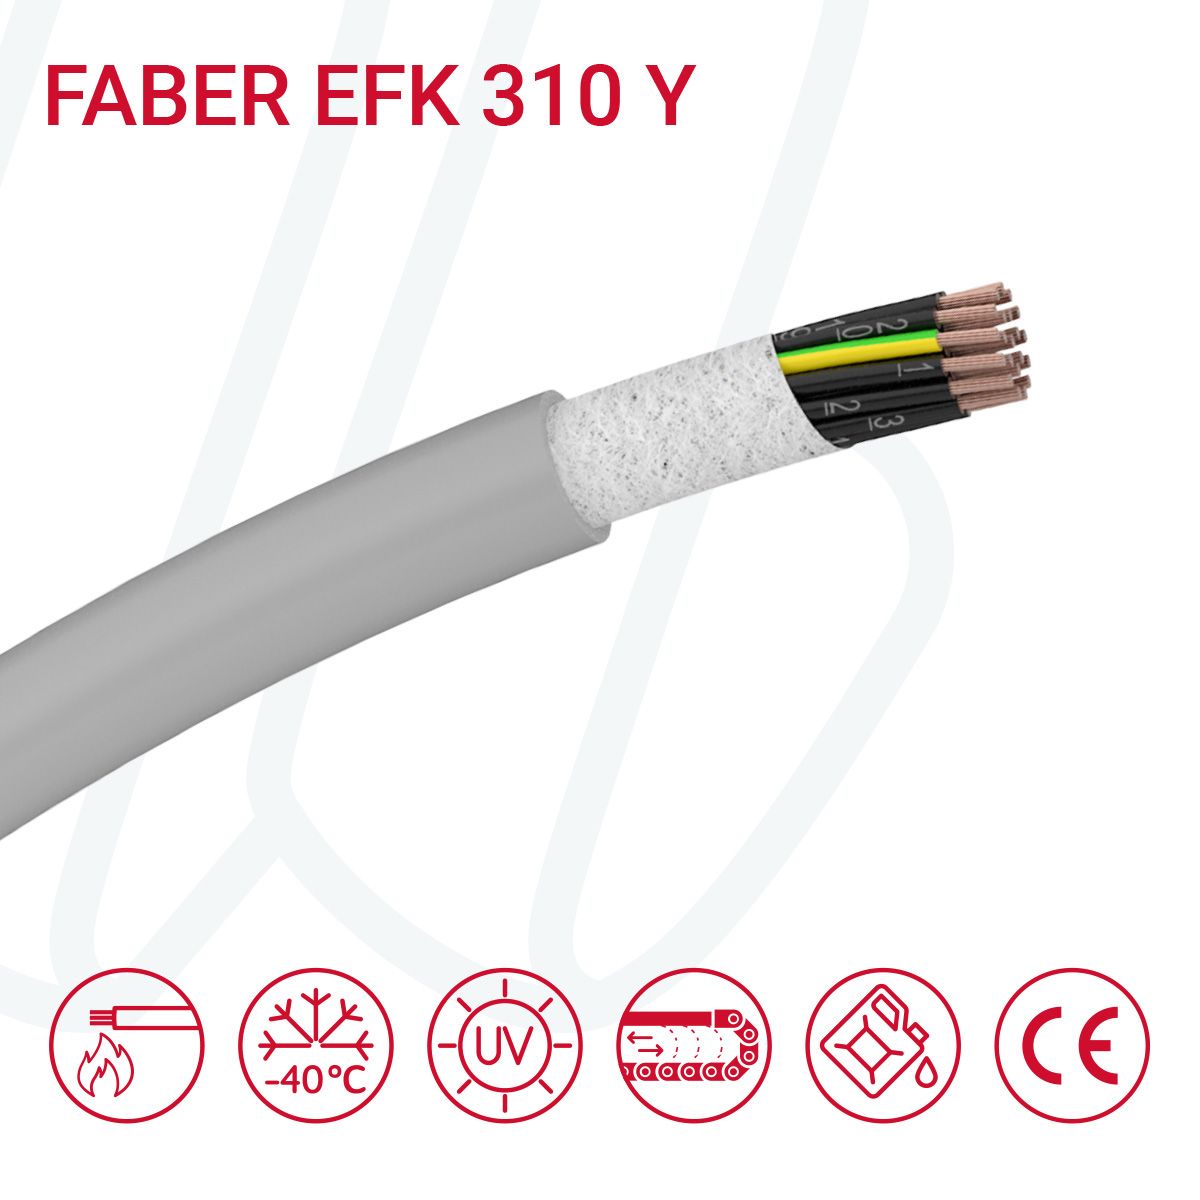 Кабель FABER EFK 310 Y 12G2.5 cUL, 12, 2.5